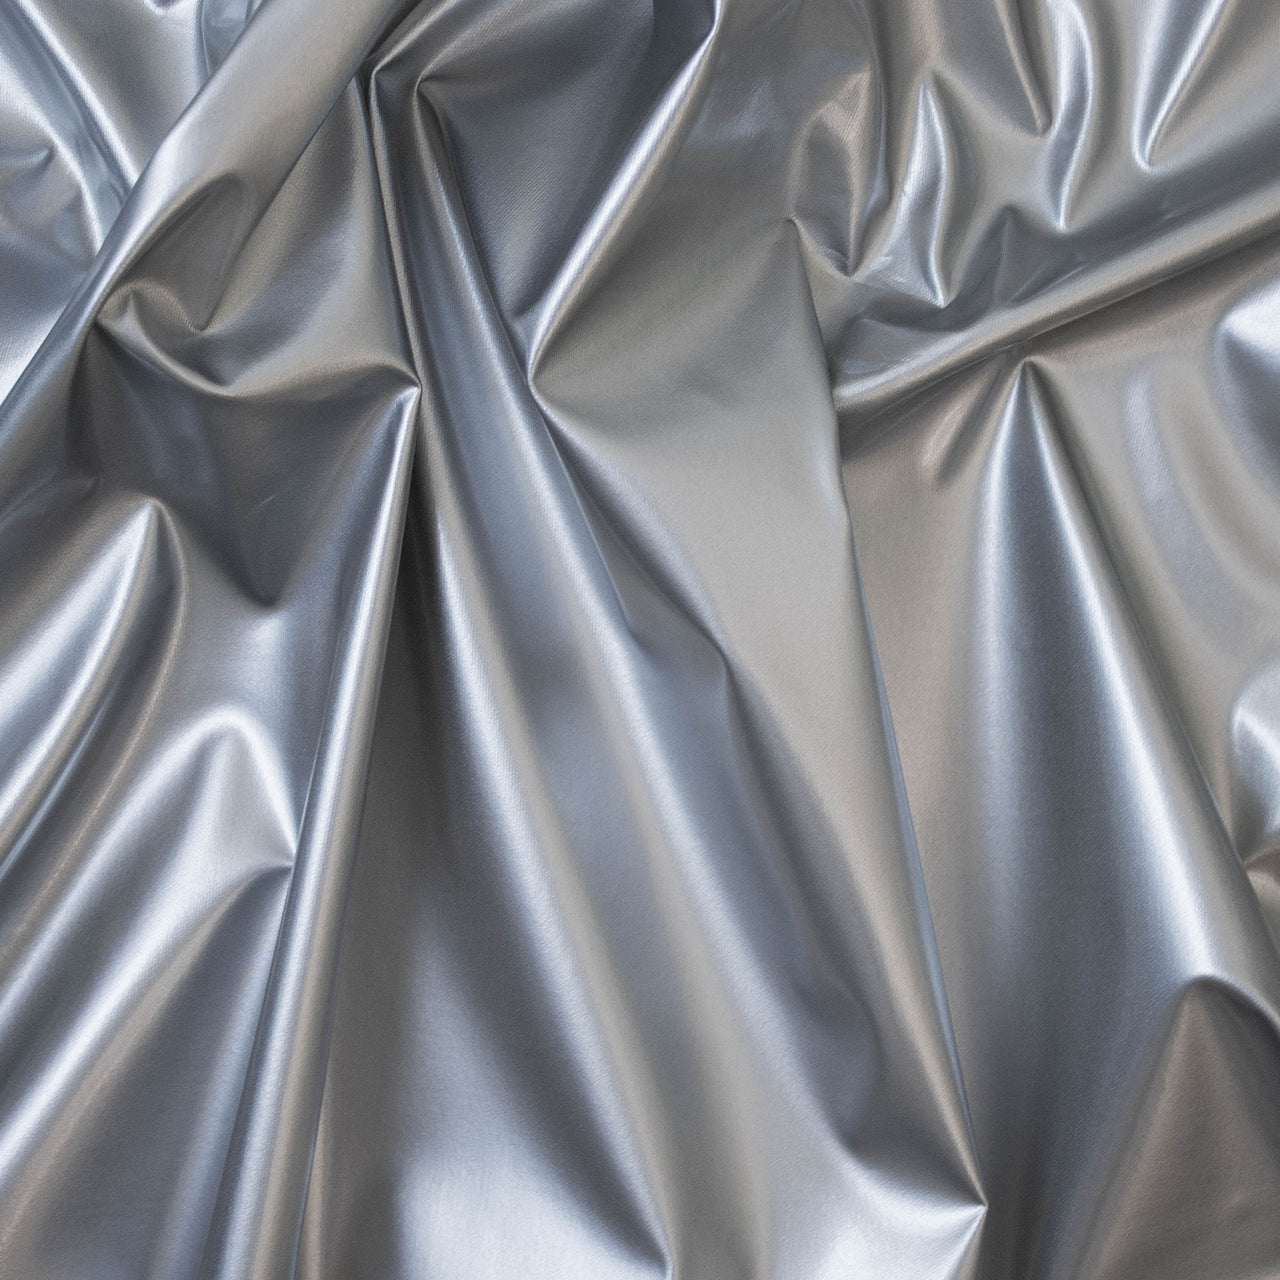 Silver PVC Shiny Stretch Fabric - 1 Way Natural Stretch - PU Coated